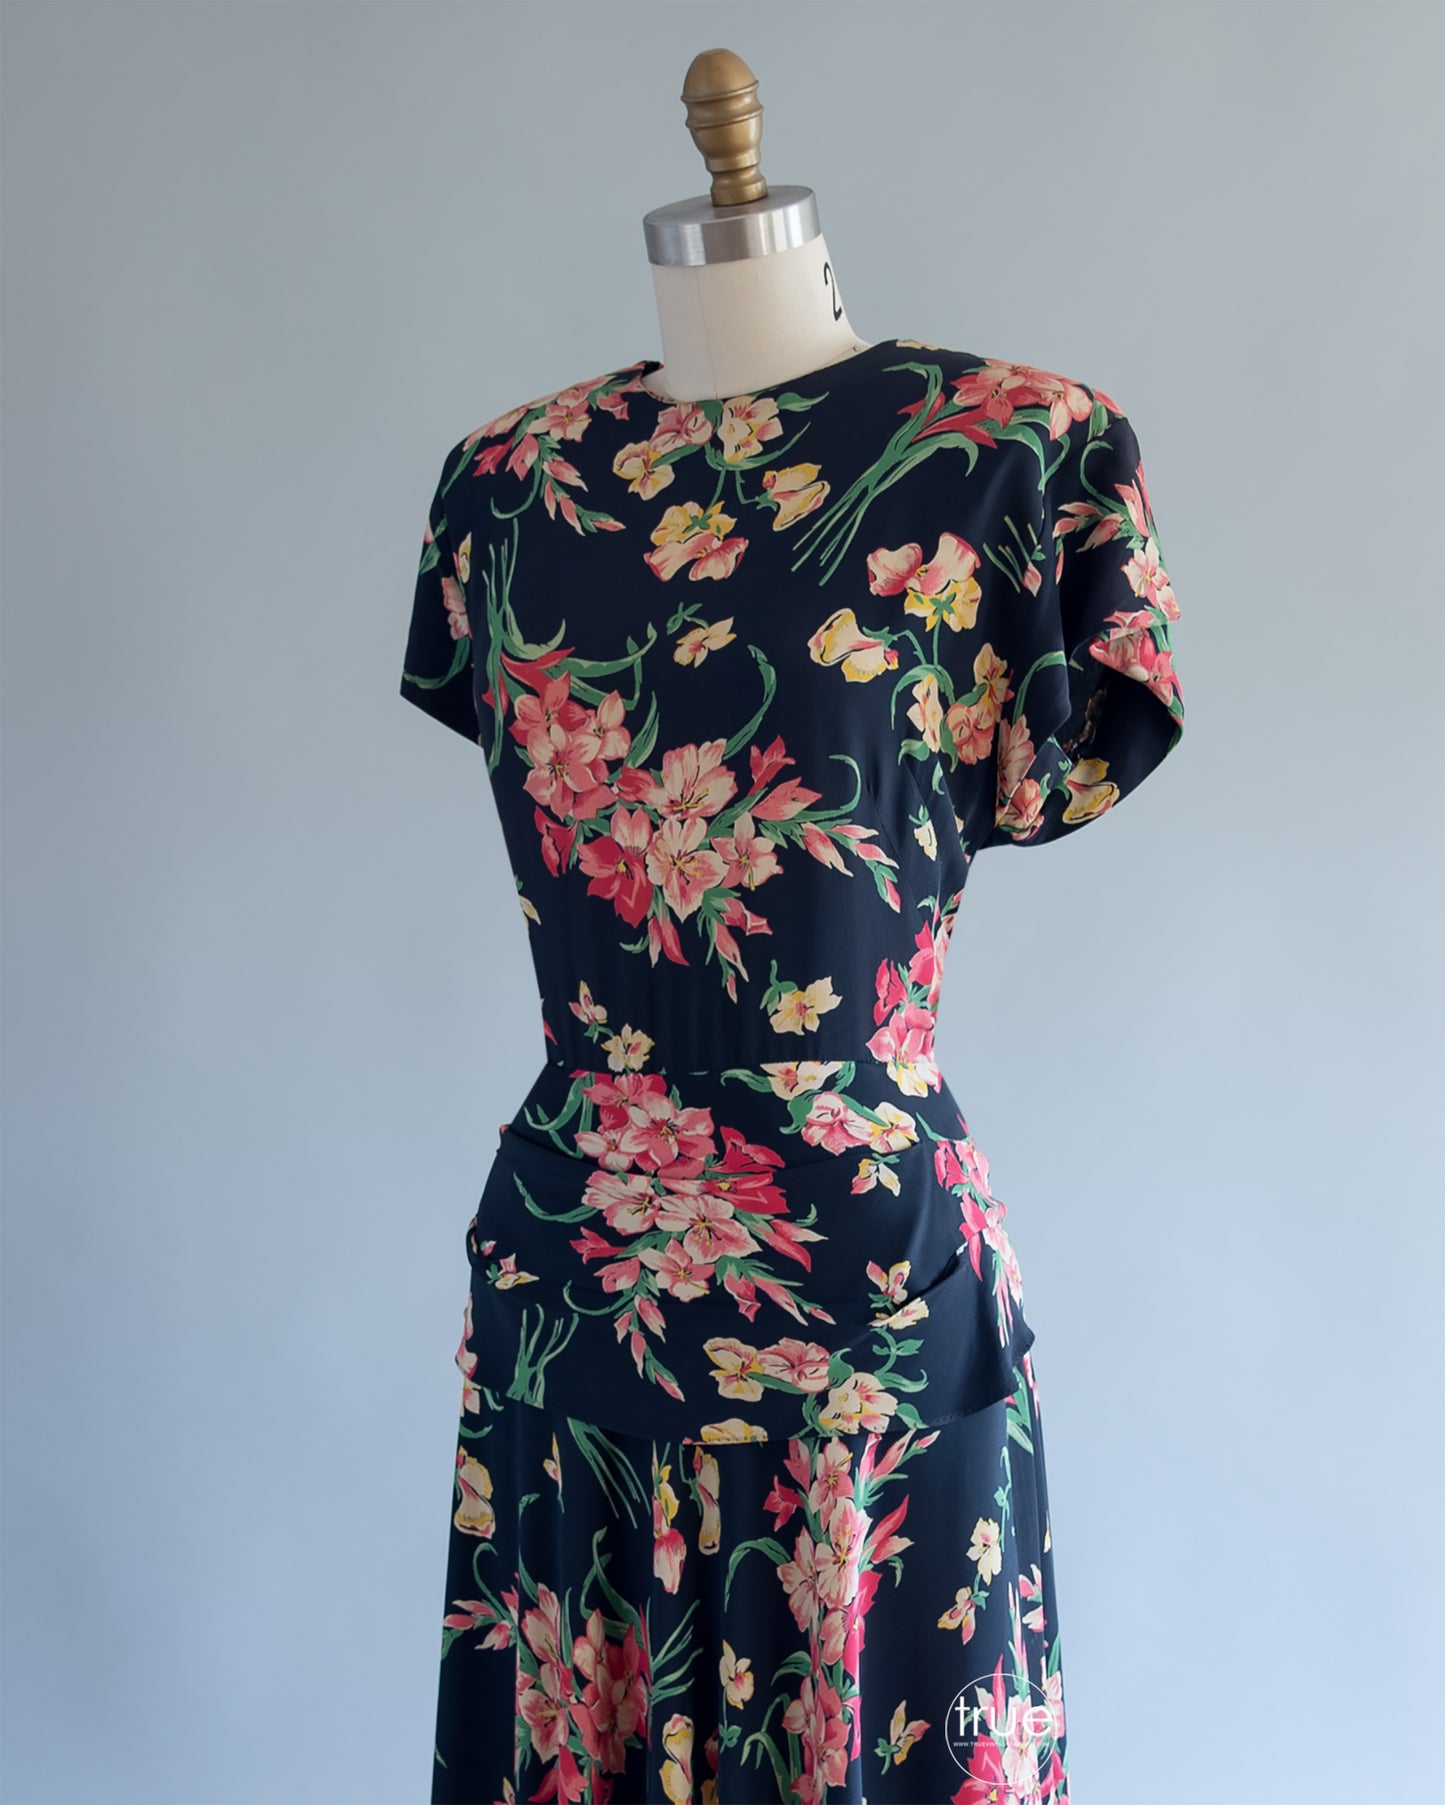 vintage 1940's dress ...fabulous spring floral COLD RAYON swishy skirt dress